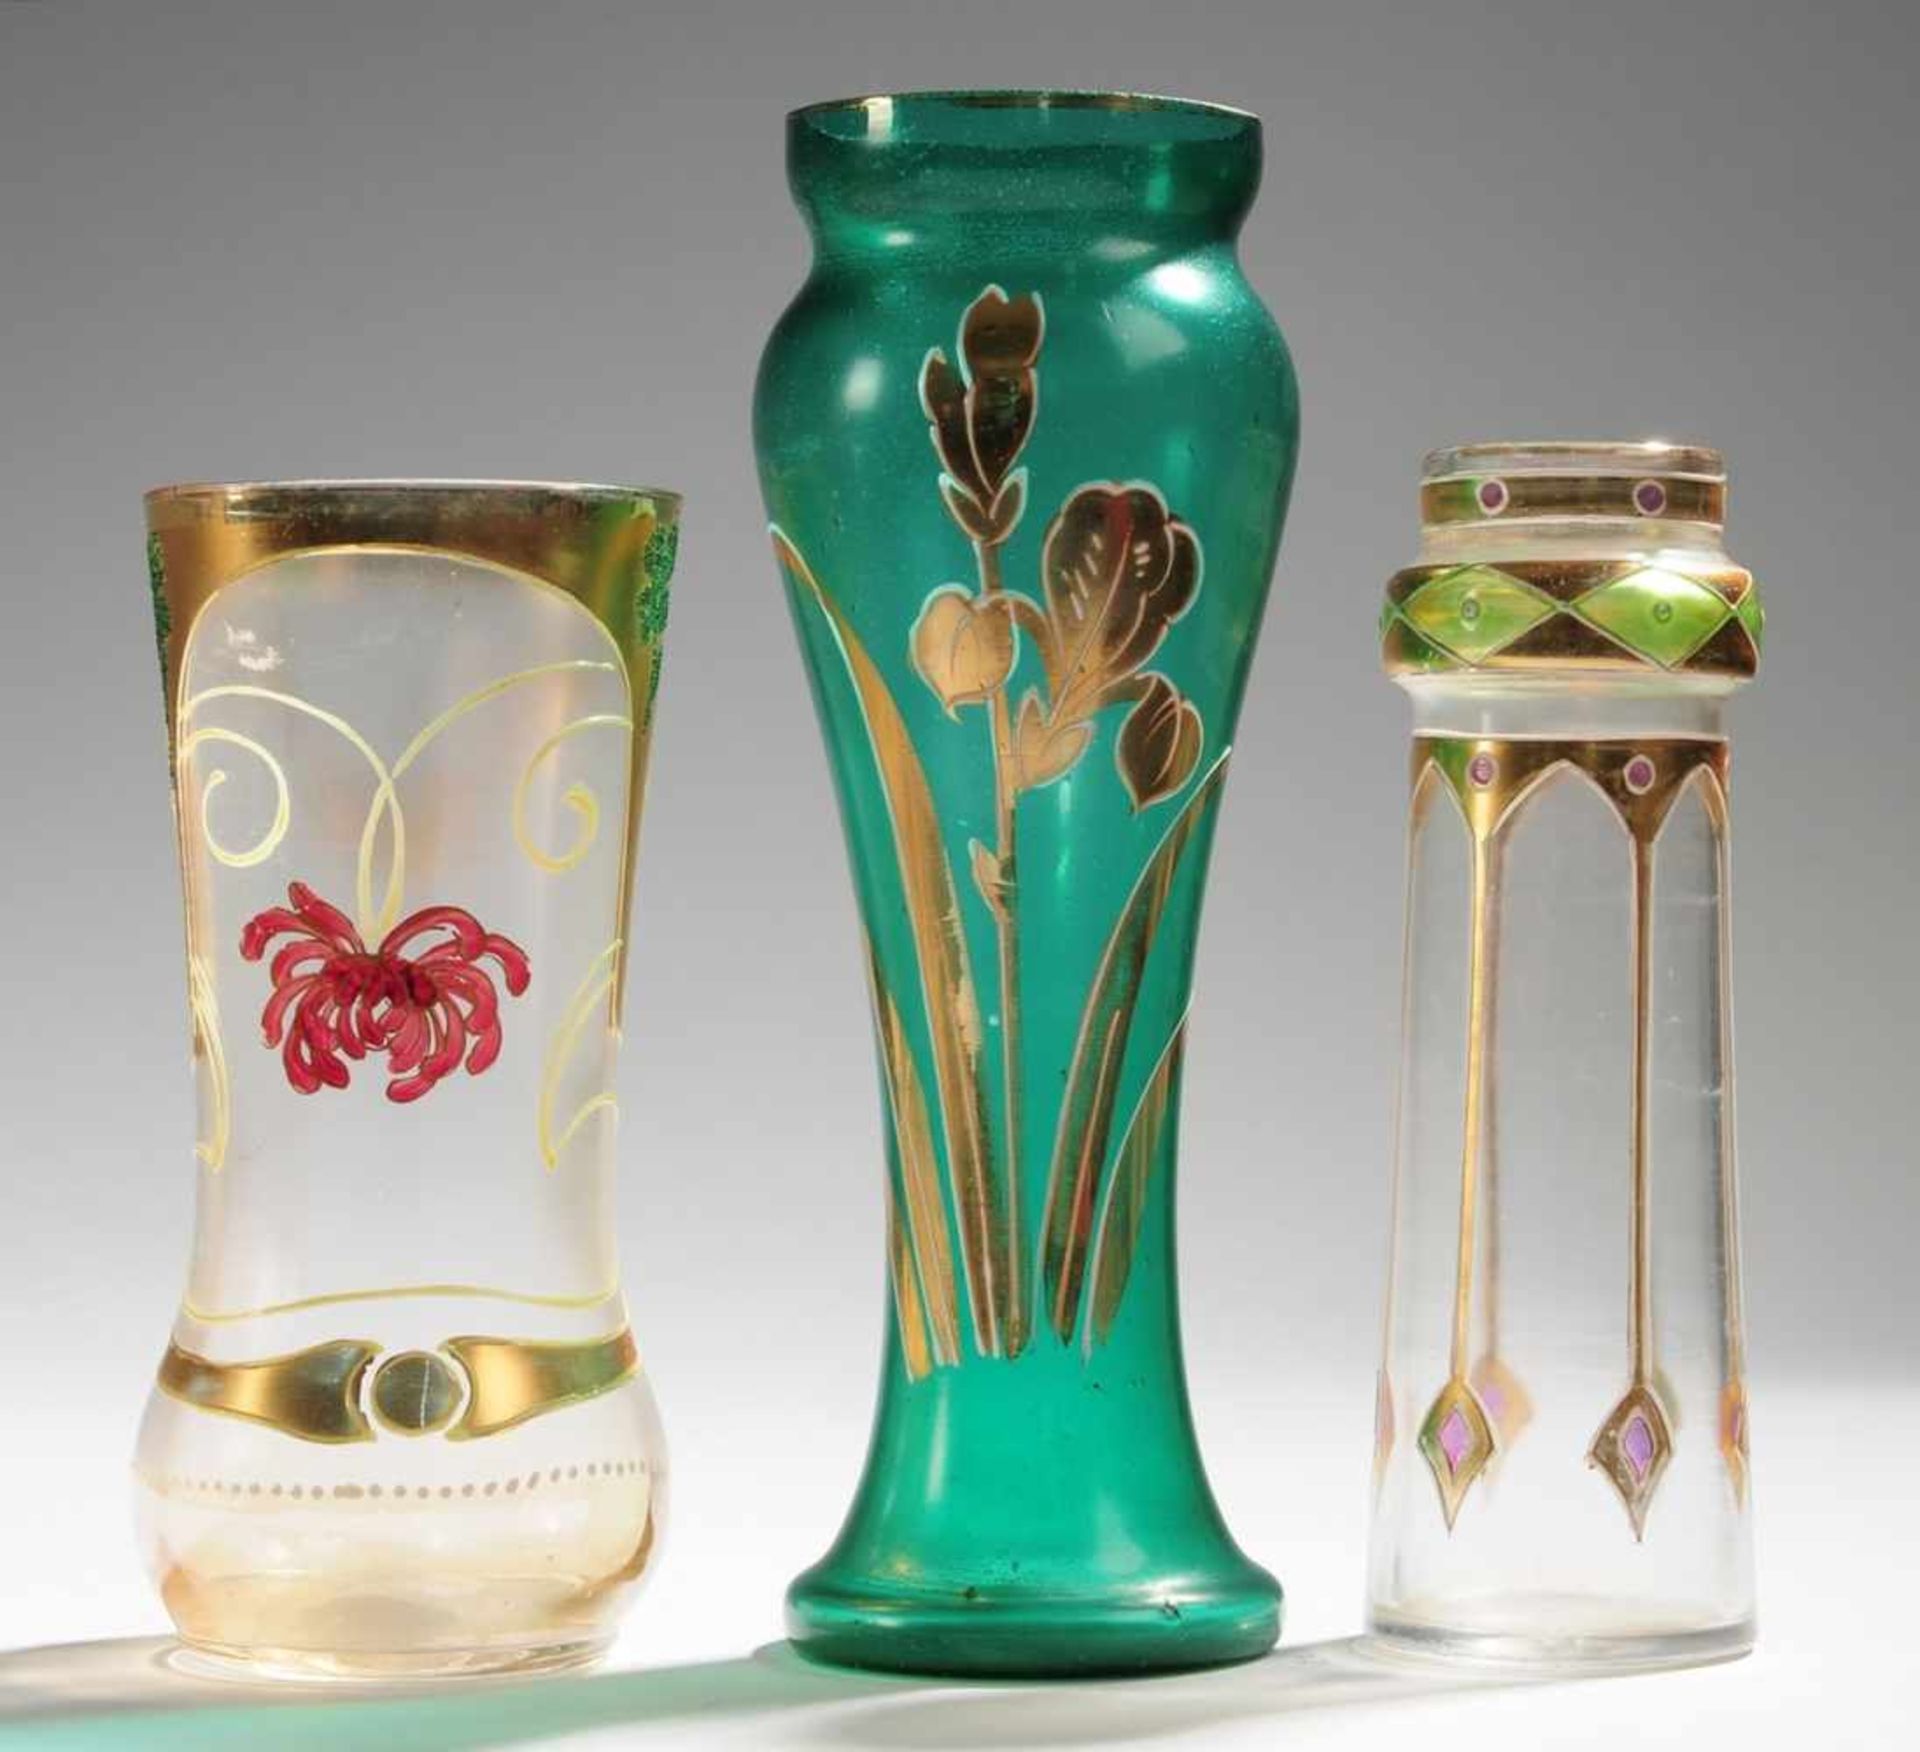 Drei Jugendstil-VasenFarbloses bzw. dunkelgrünes Glas. Formgeblasen. Versch. Formen. Auf